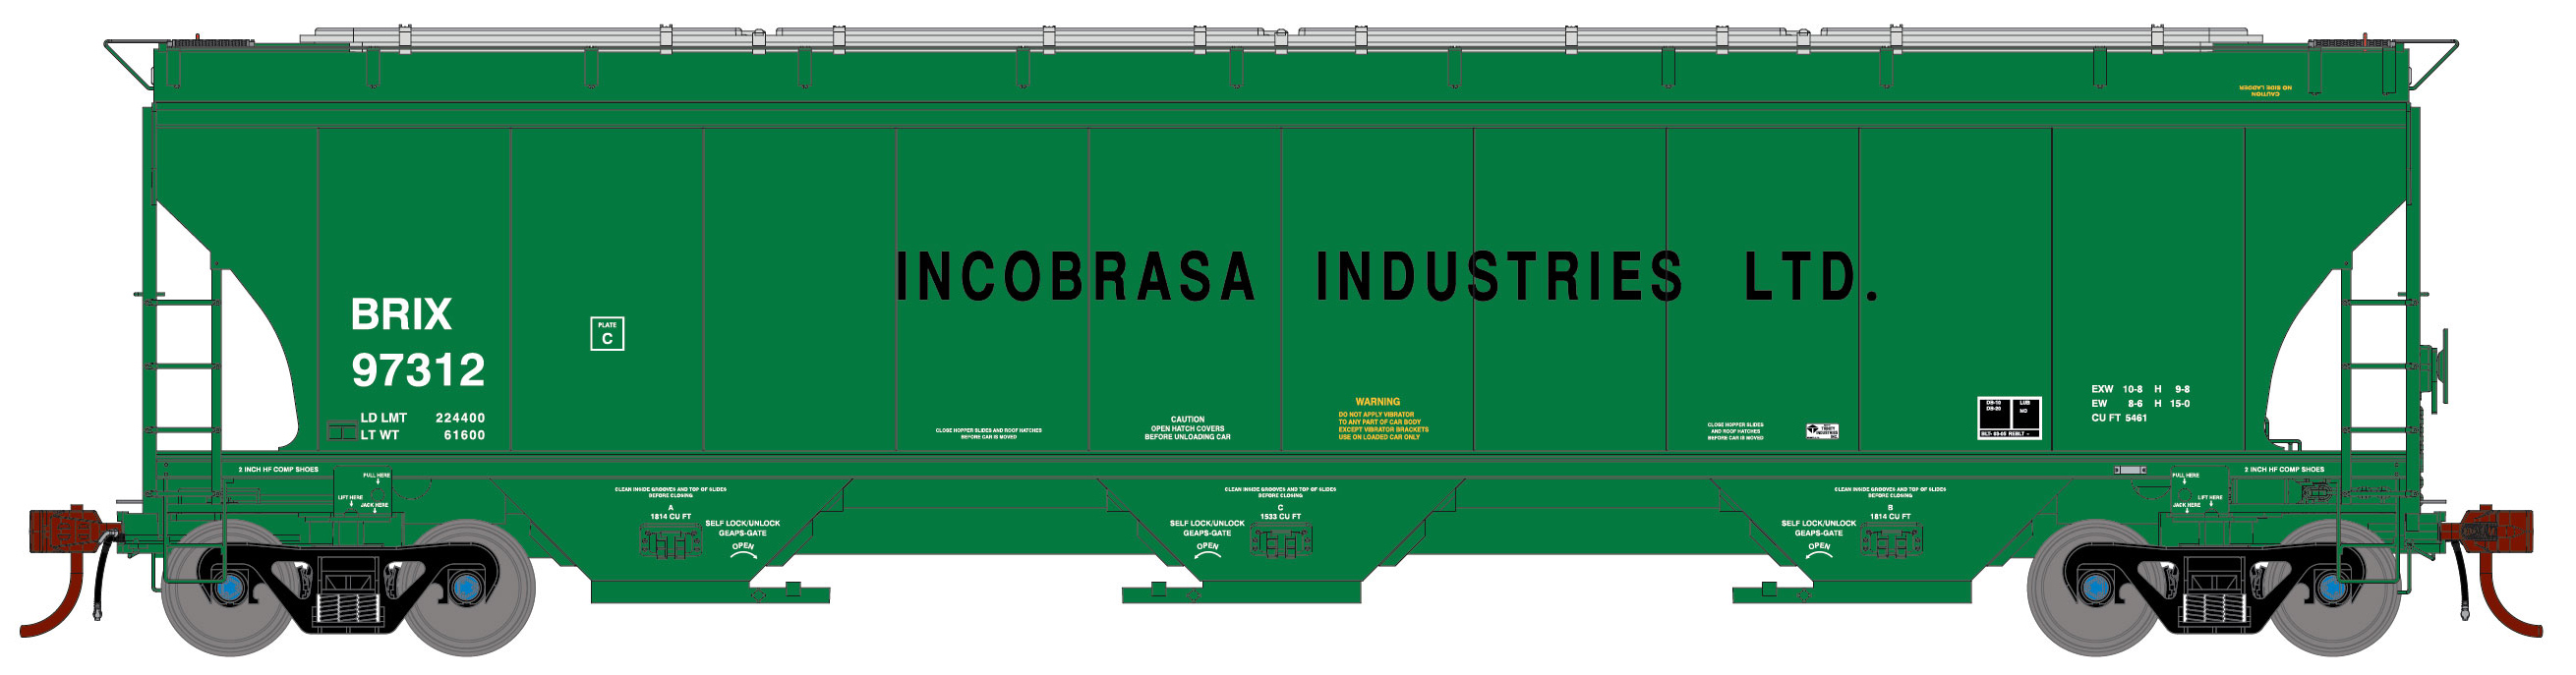 BRIX / Incobrasa Industries Ltd.